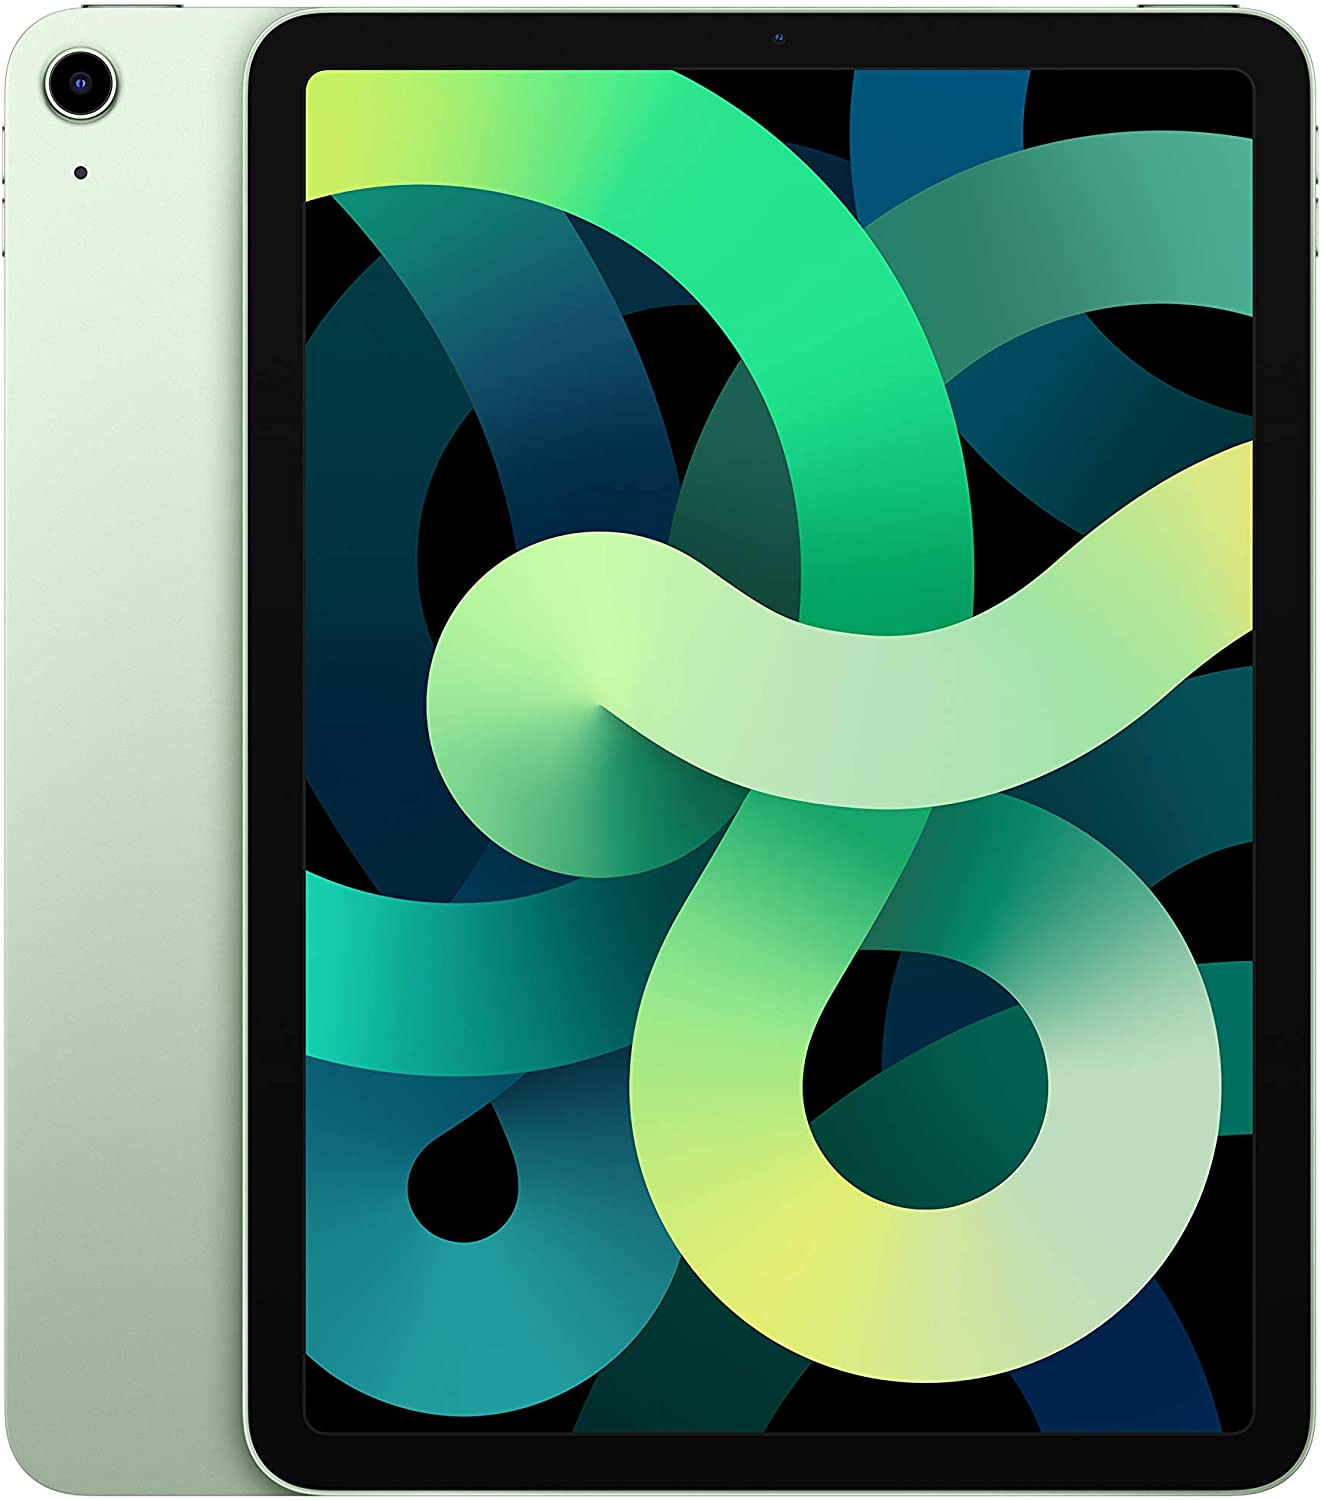 Amazon.com : 2020 Apple iPad Air (10.9-inch, Wi-Fi, 64GB) - Green (4th Generation) : Electronics $459.00